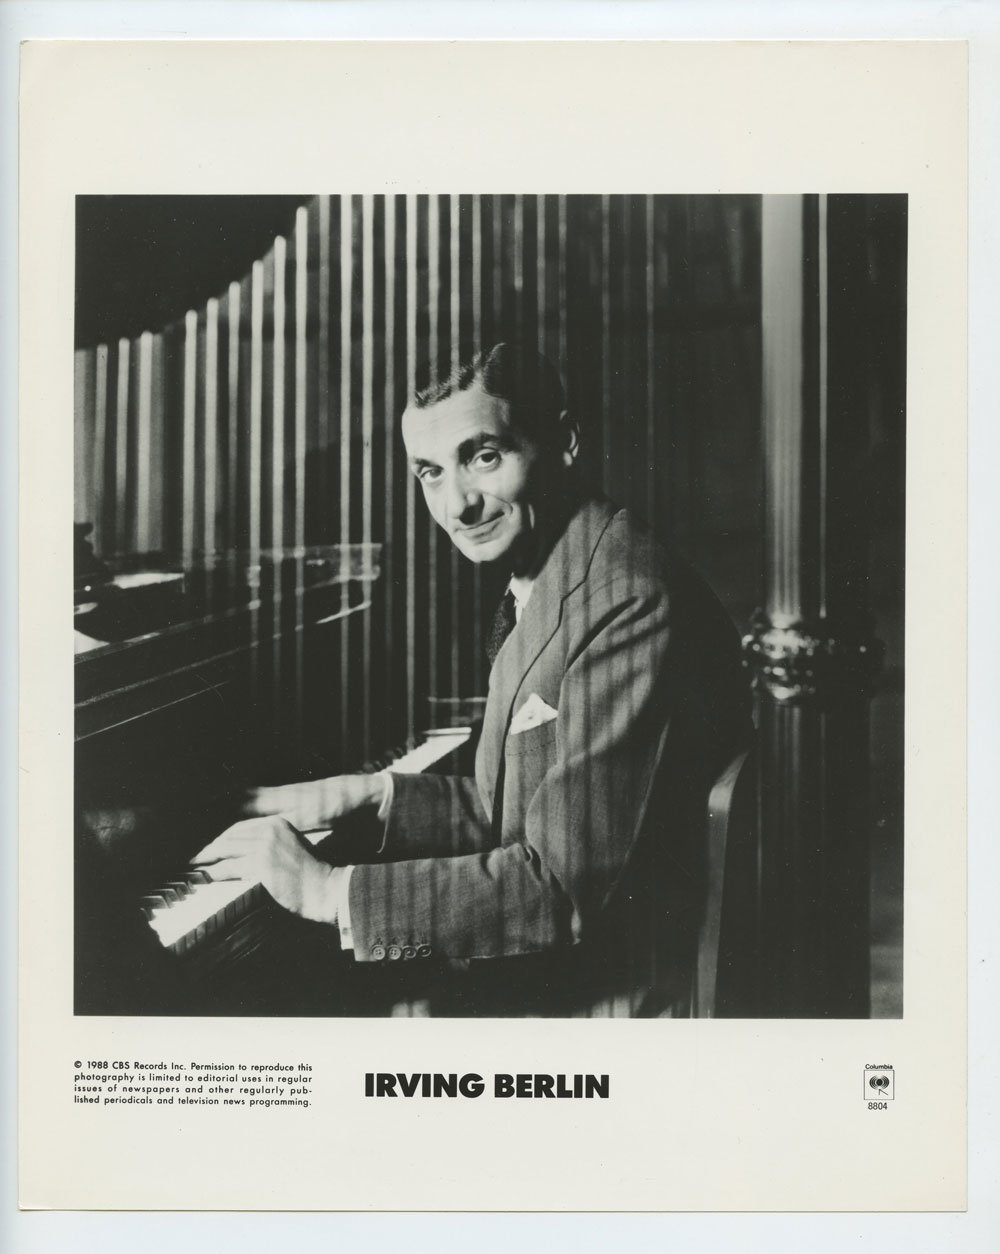 Irving Berlin Photo 1988 CBS Records